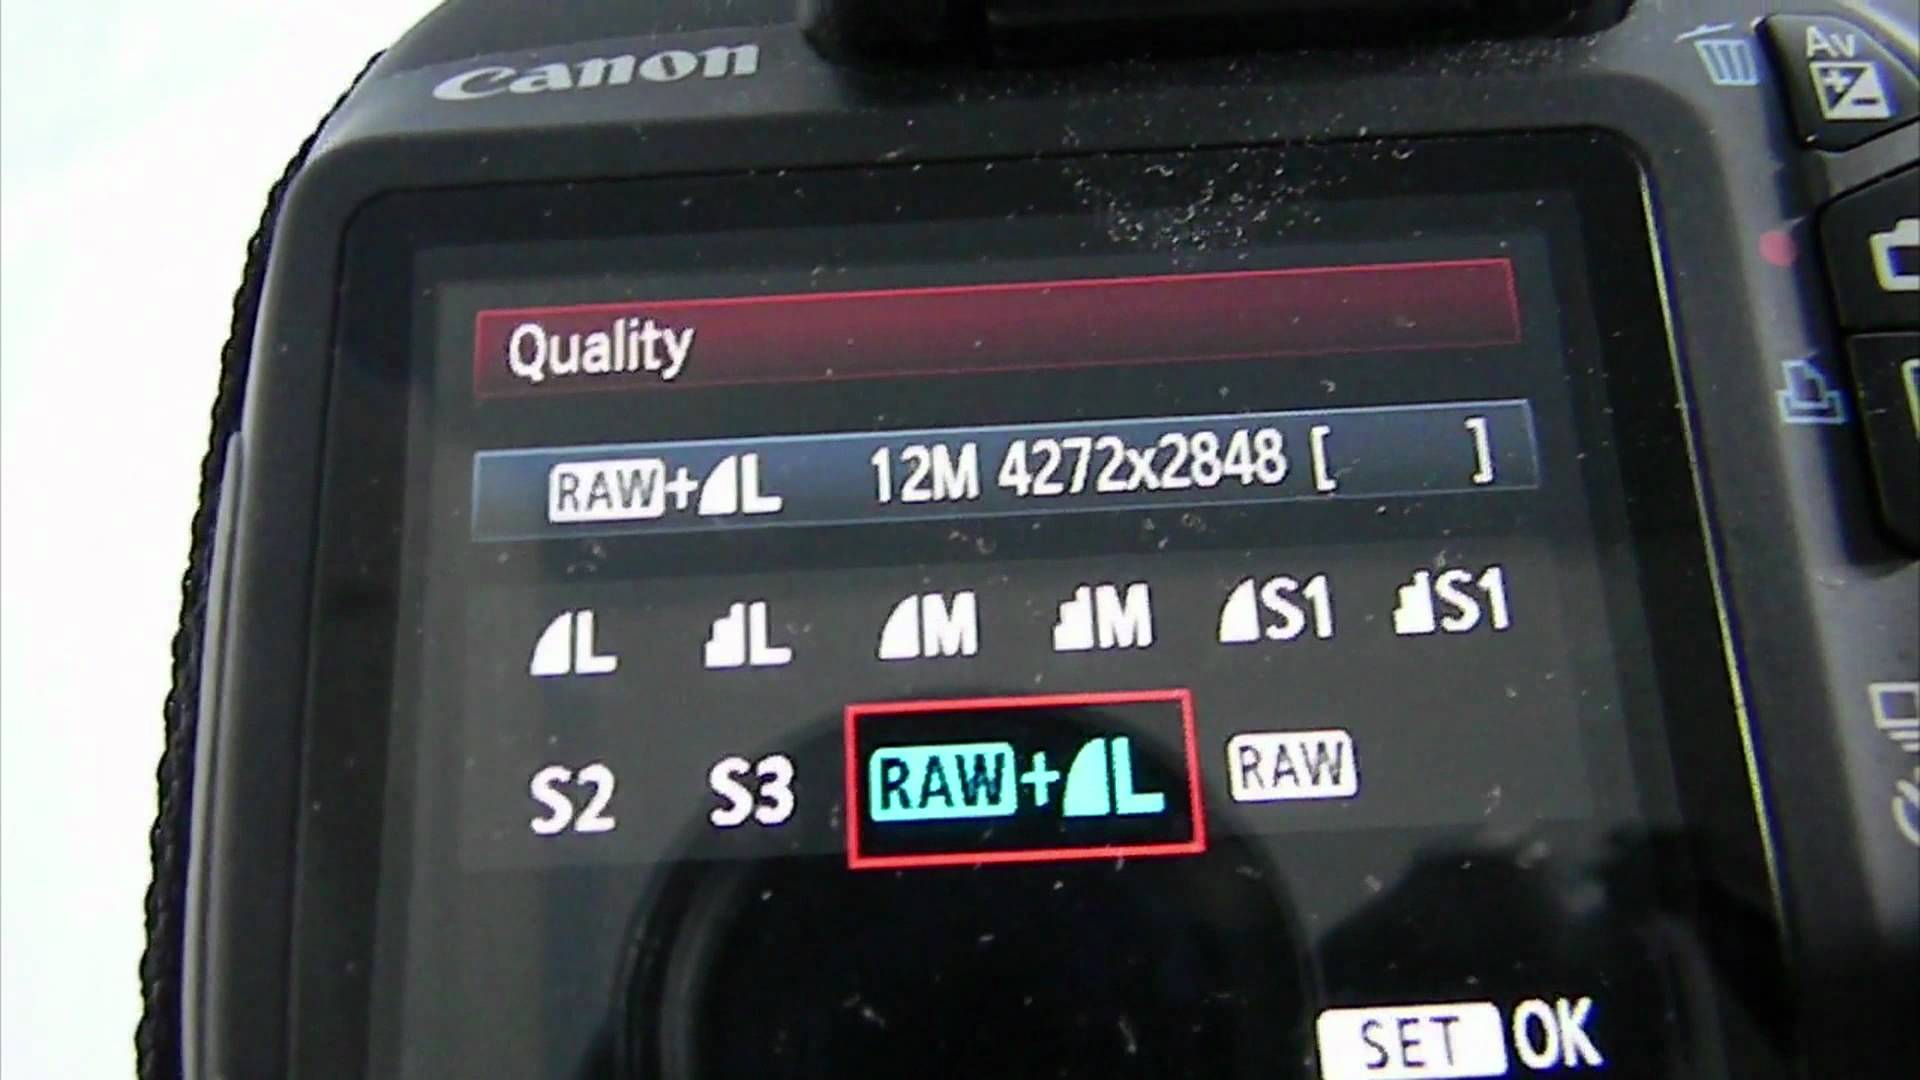 Review of Canon EOS Rebel T3 12.2 Megapixel SLR Camera